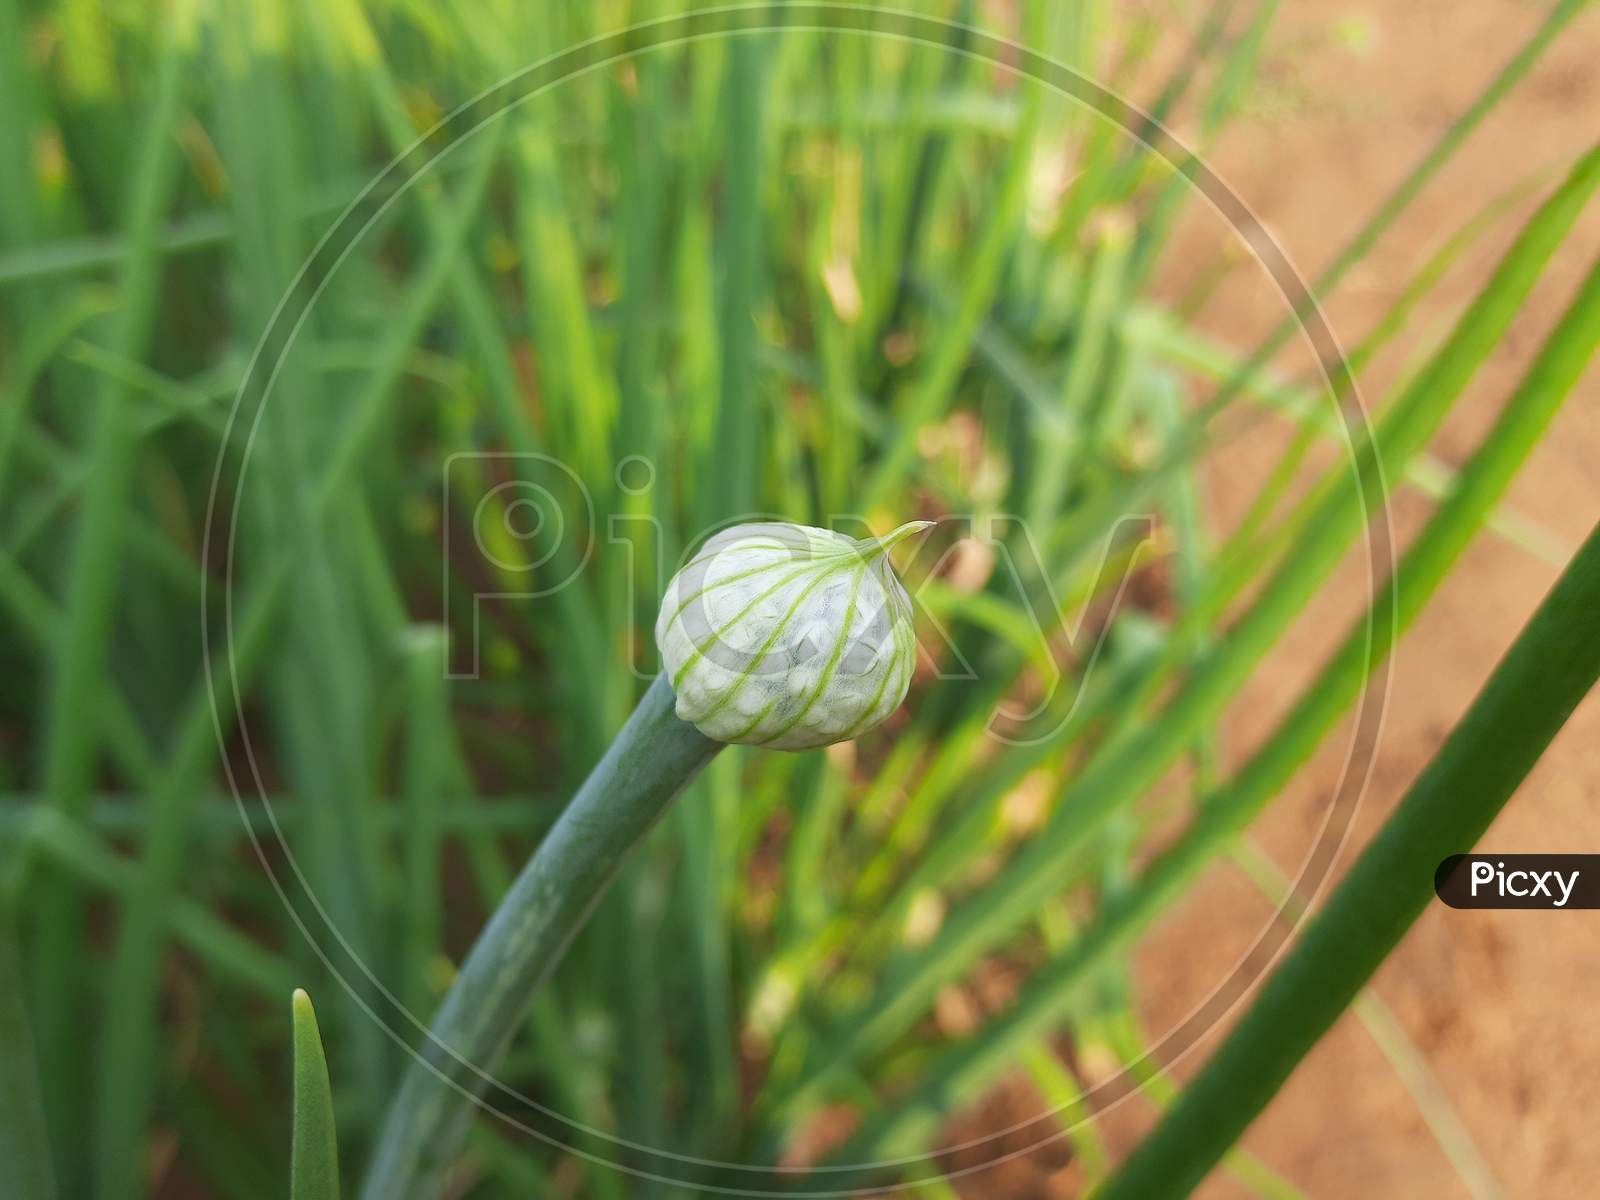 Flowering onion plant.